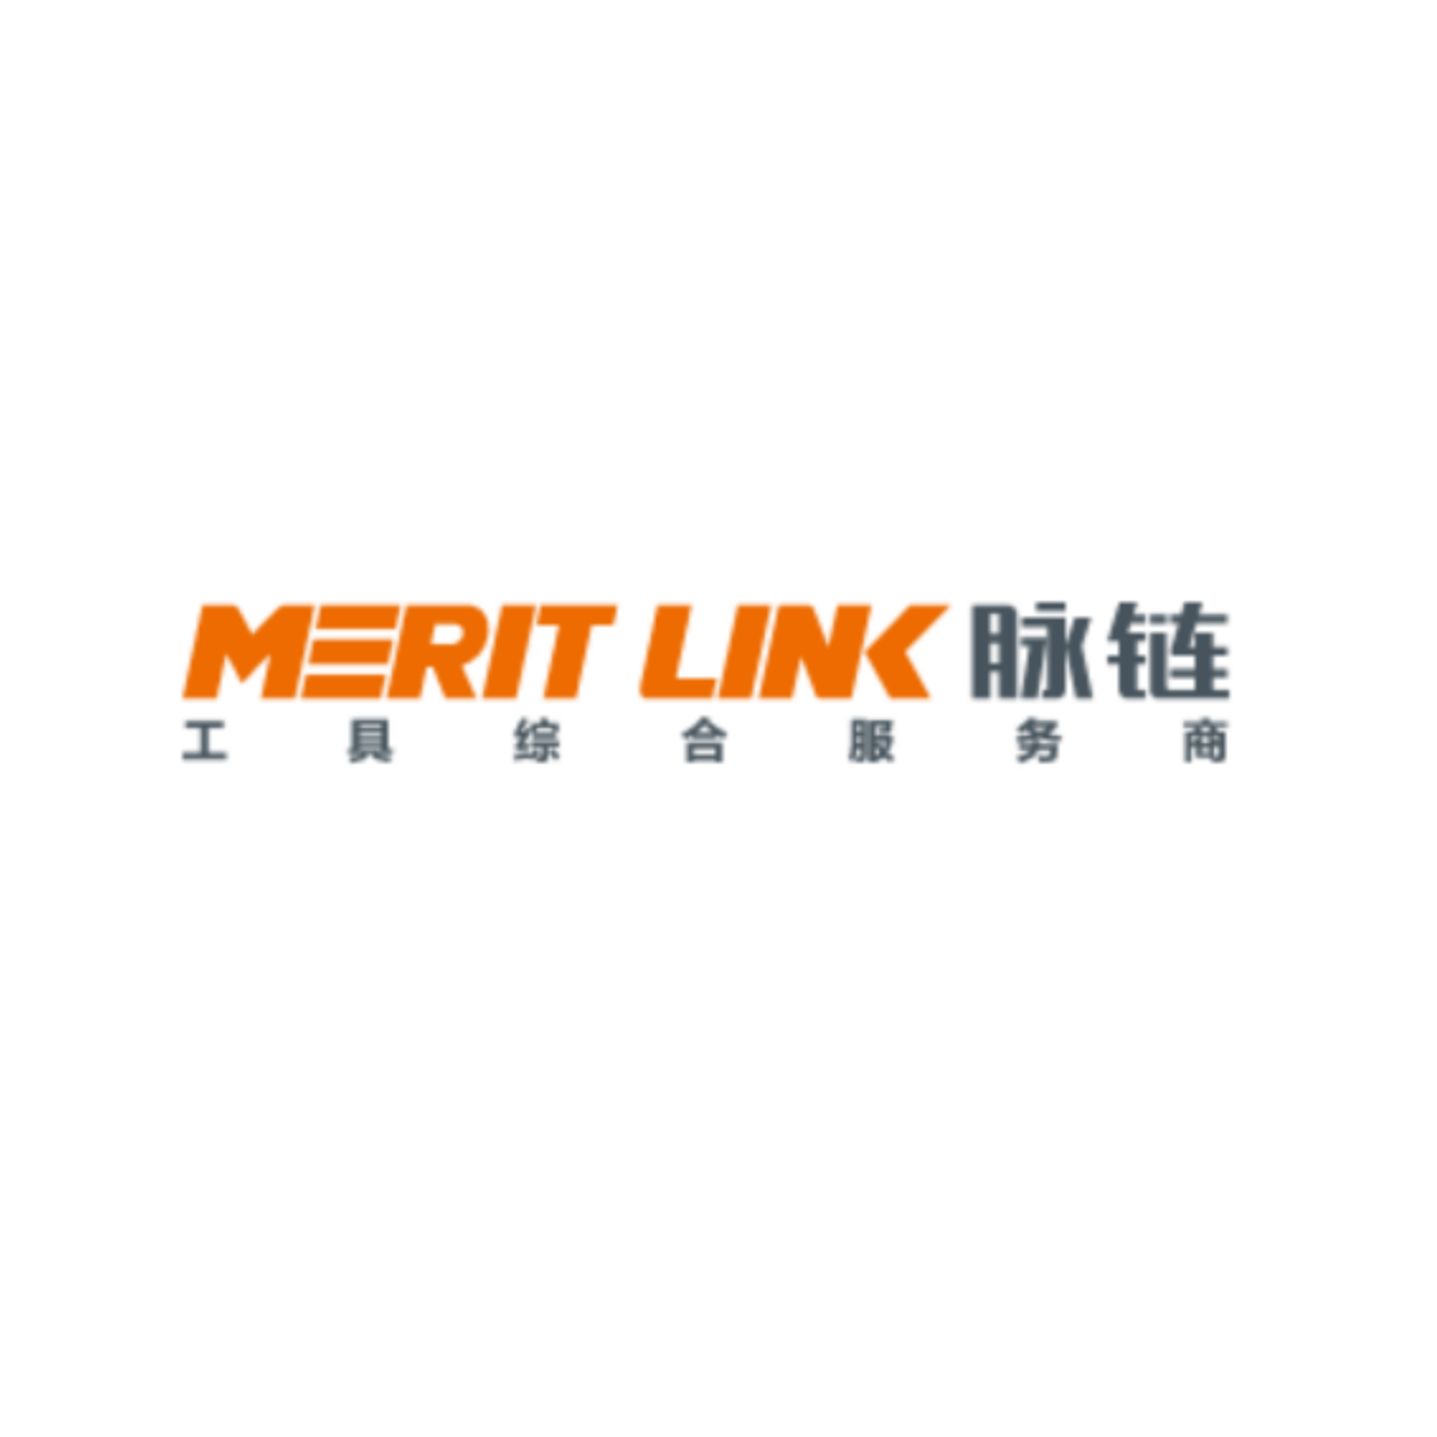 Merit-link logo